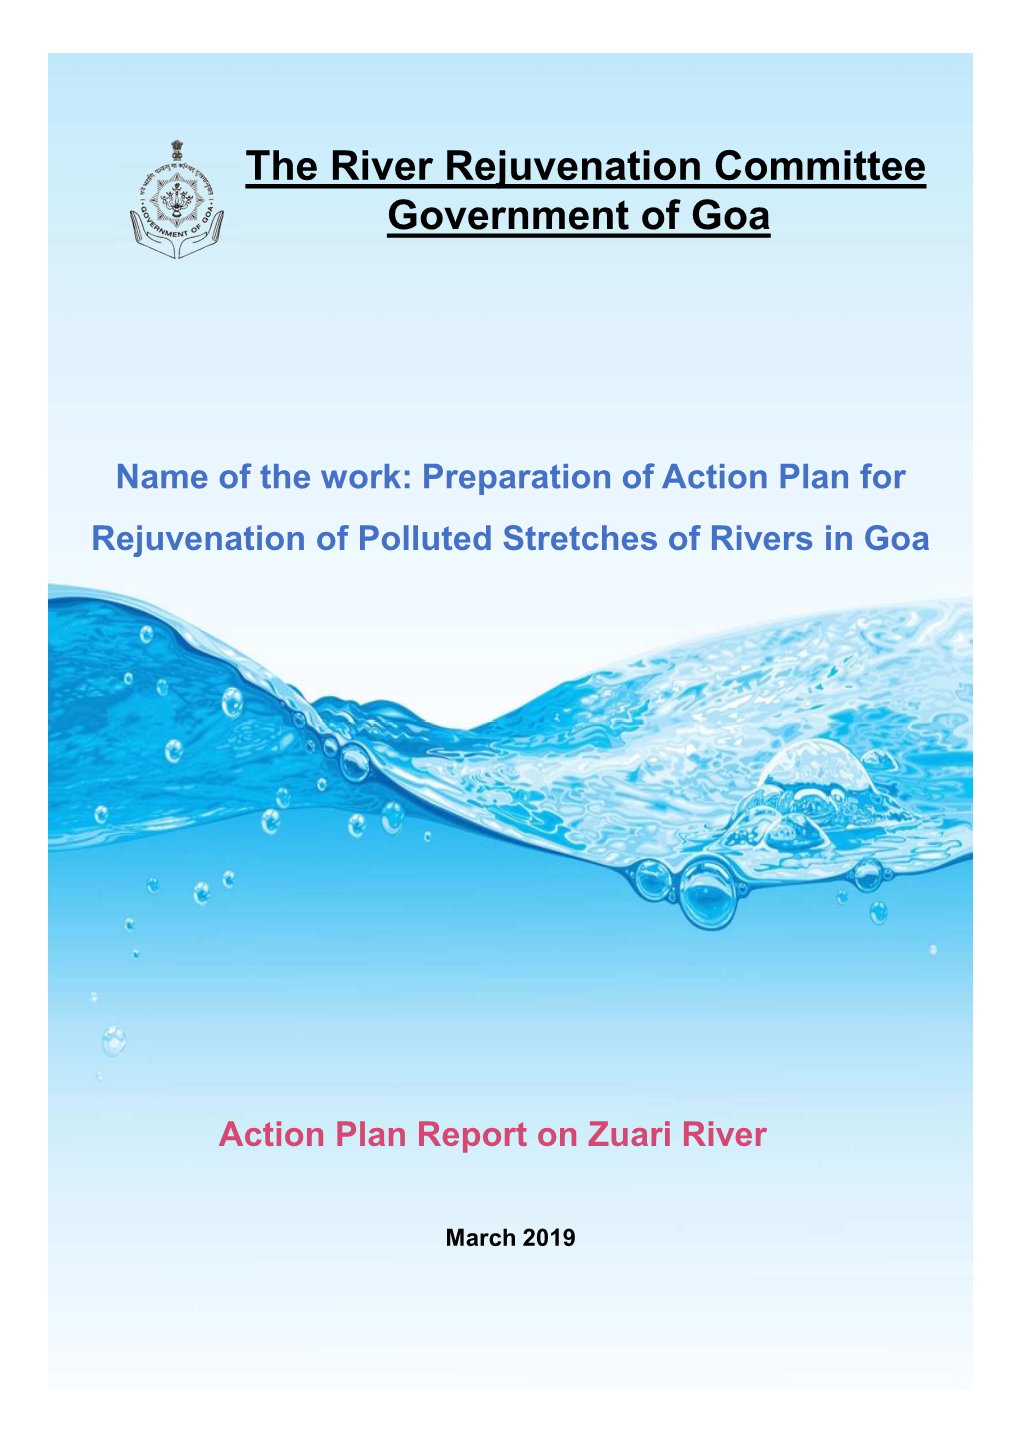 Zuari River Action Plan